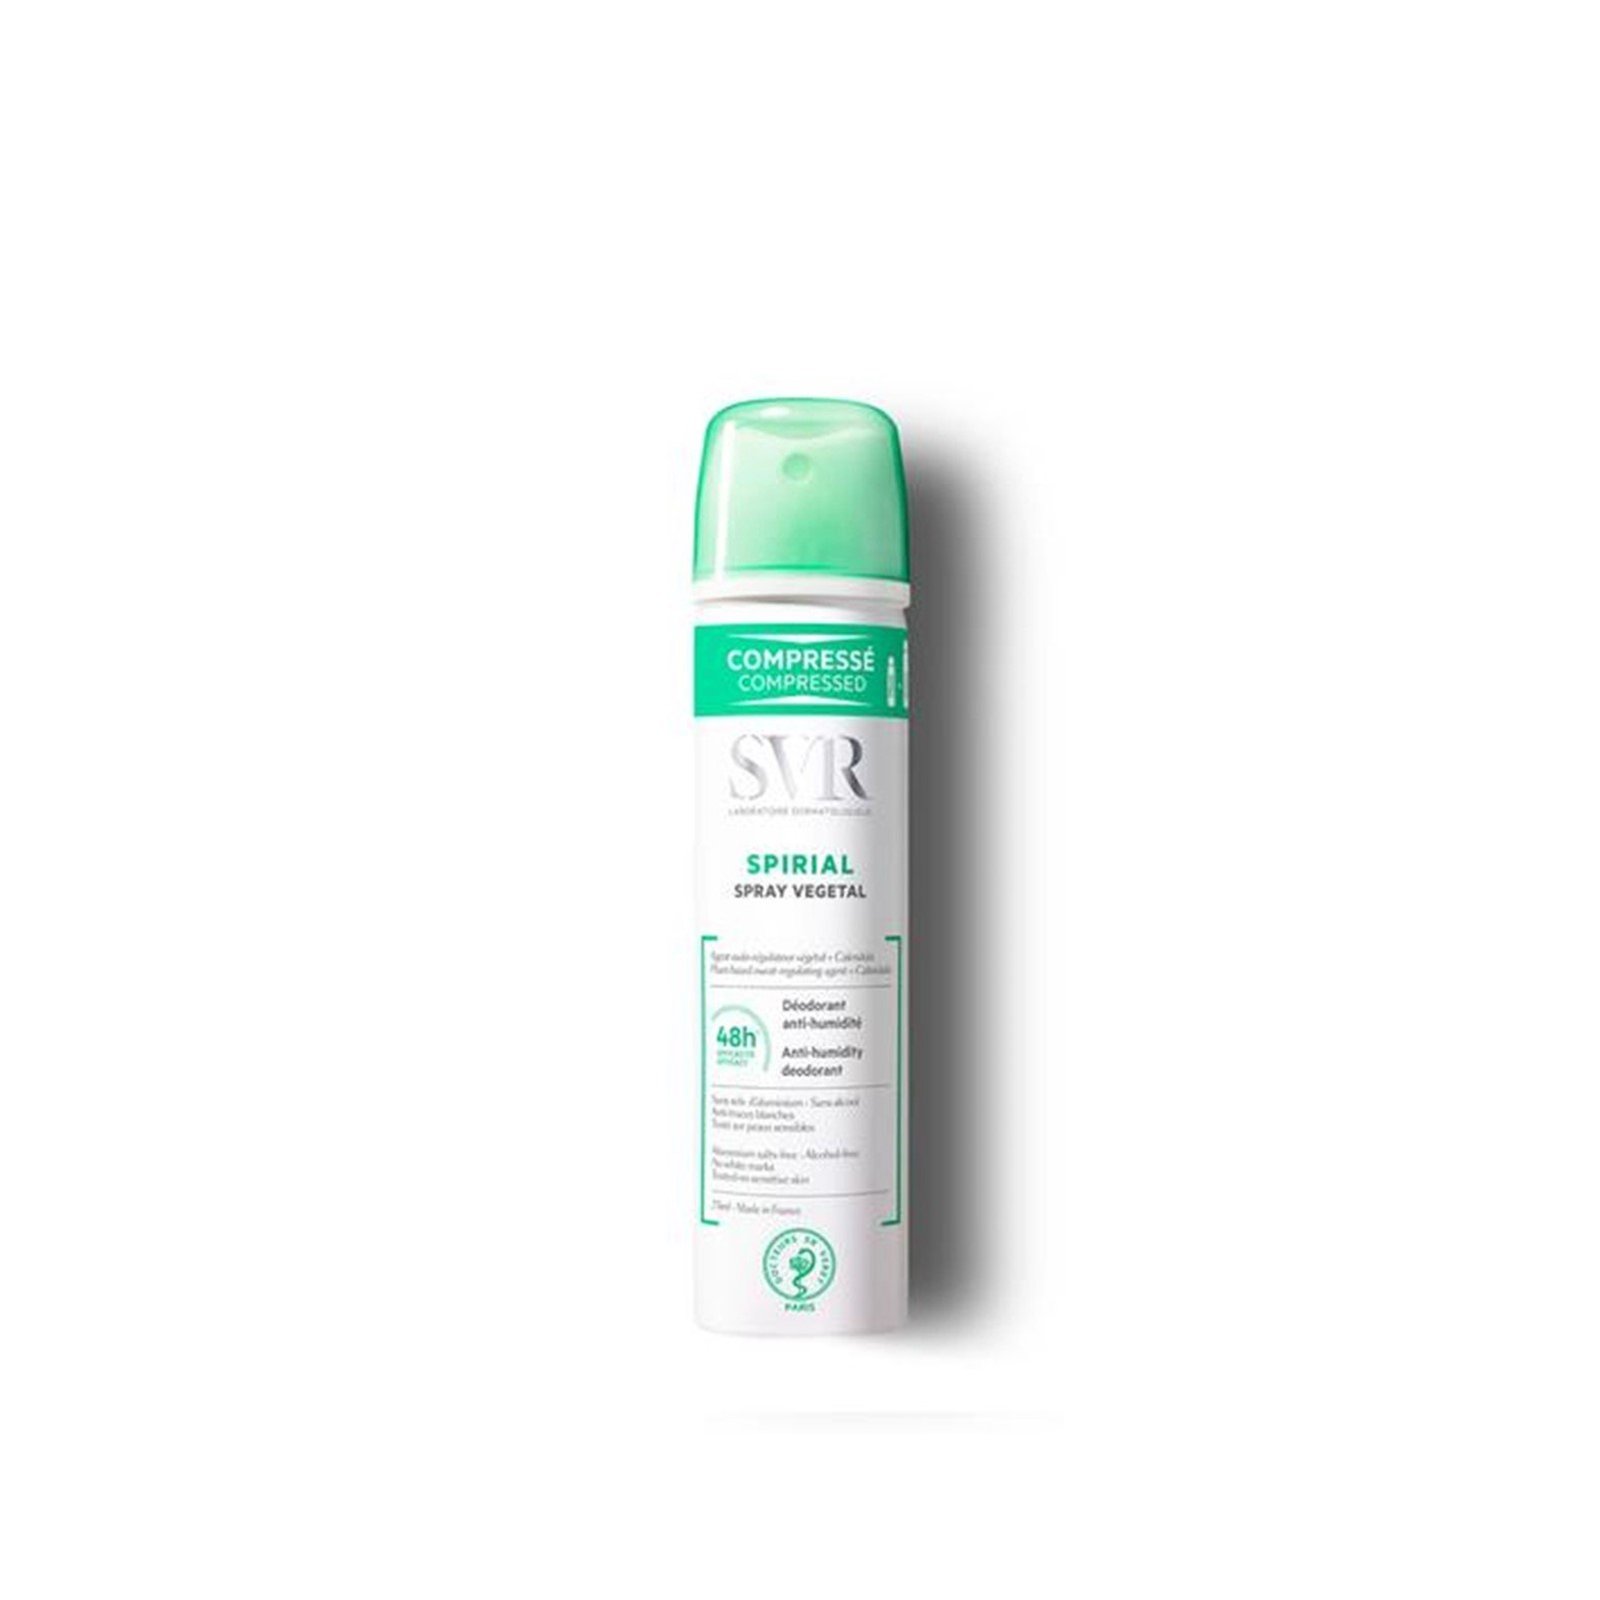 SVR Spirial 48h Vegetal Anti-Humidity Deodorant Spray 75ml (2.54fl oz)